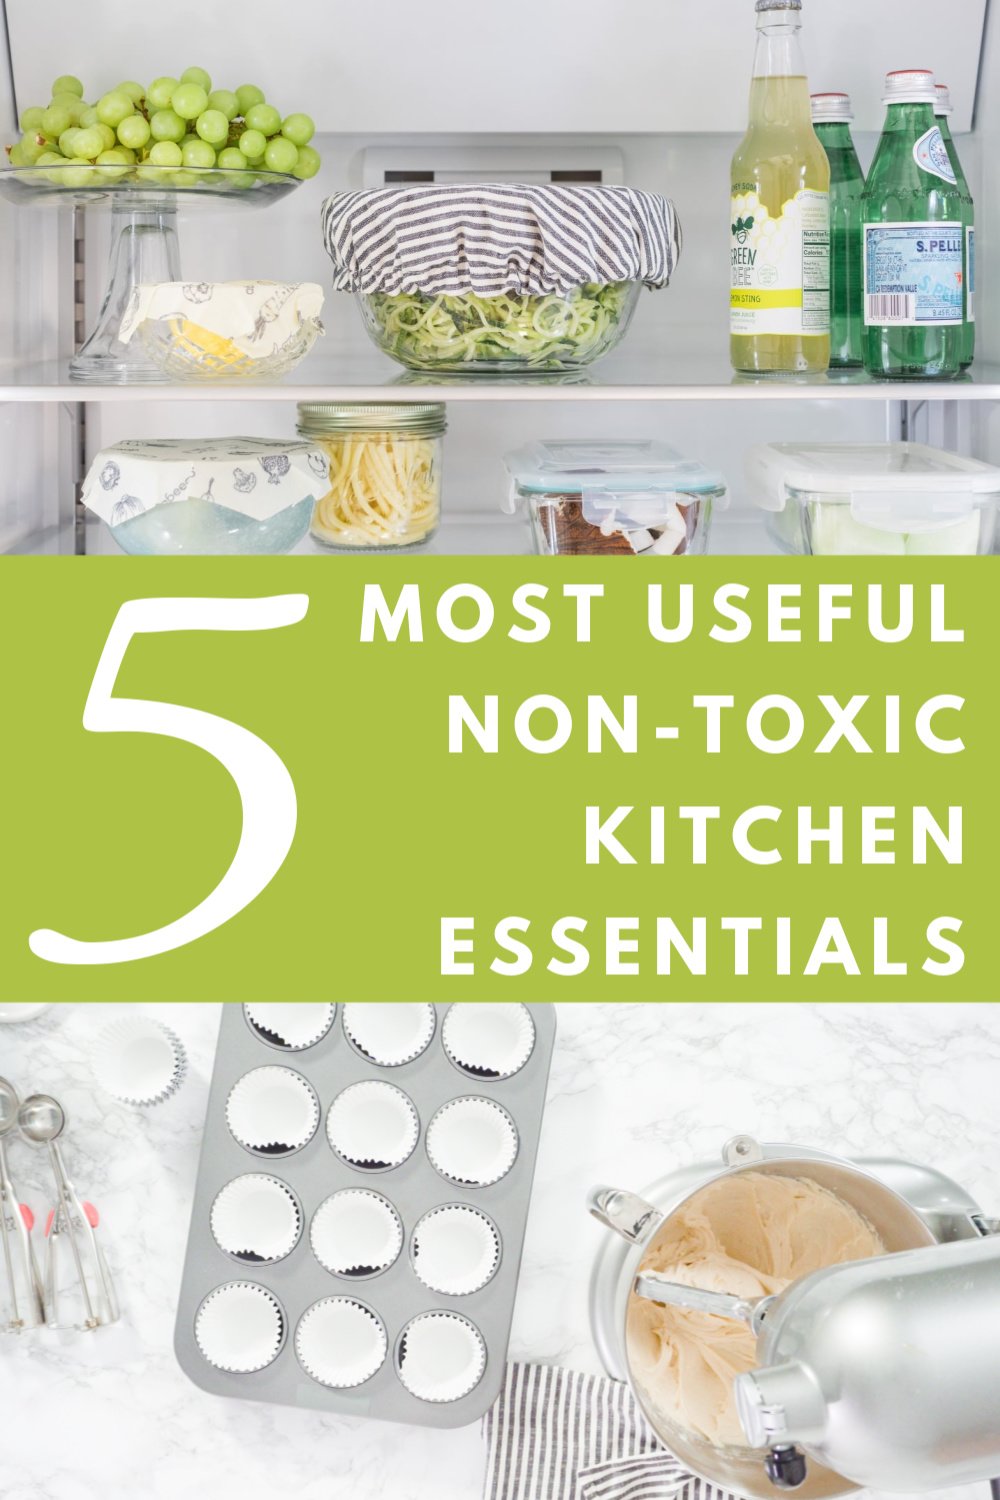 Healthy Kitchen Essentials: Best Non-Toxic & Most Practical Kitchen Tools